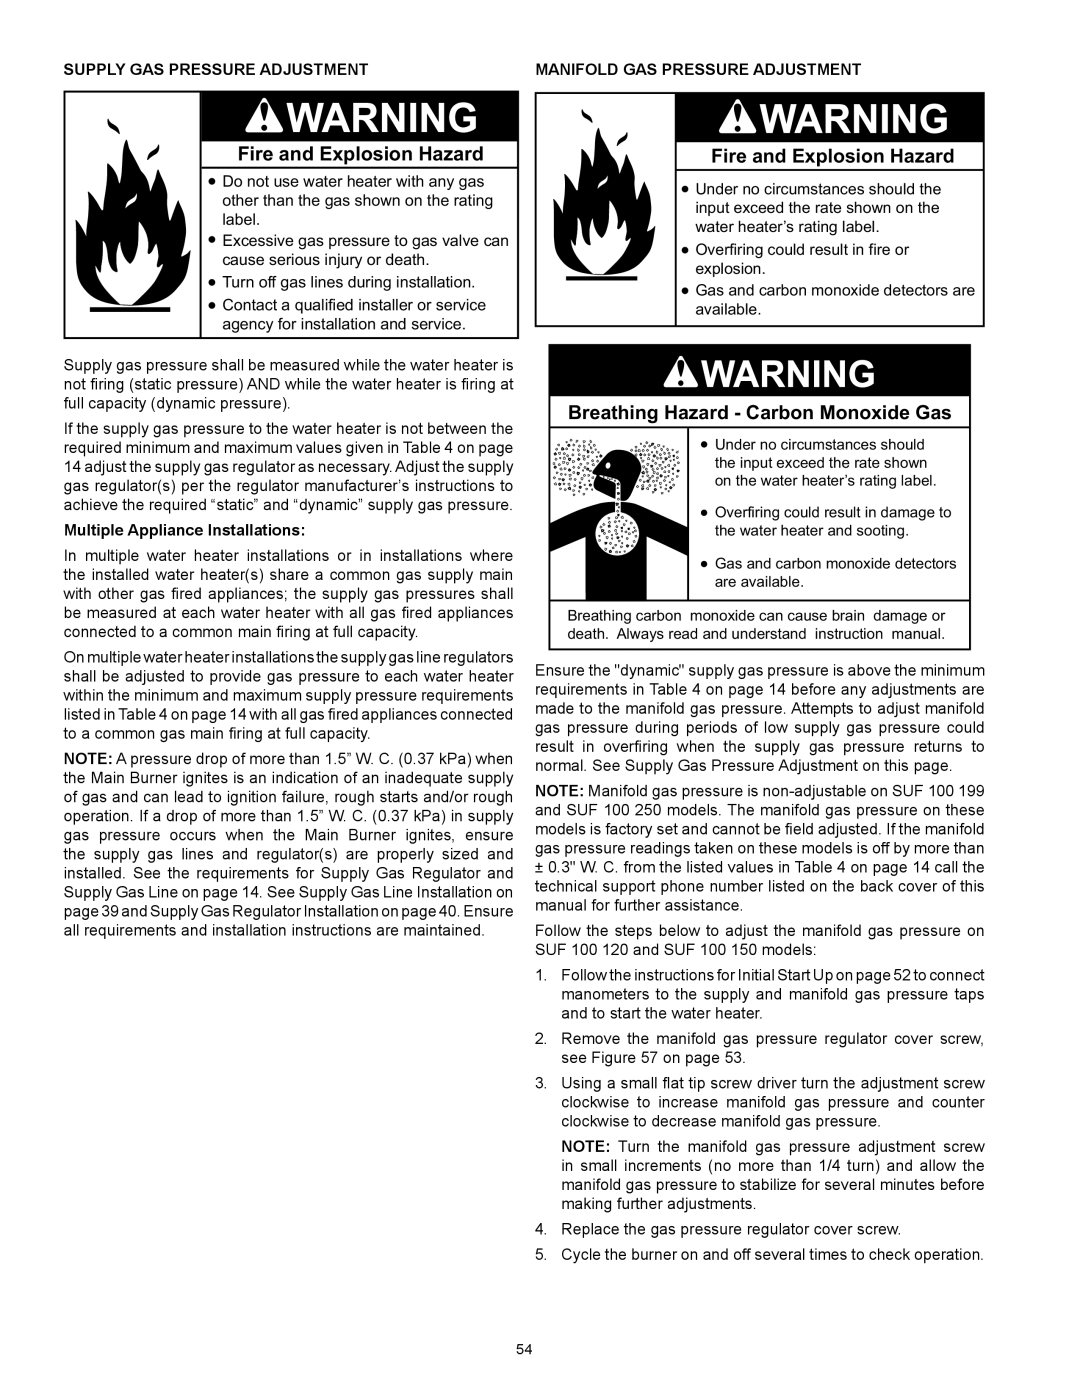 State Industries SUF-60-120, SUF-100-250 Fire and Explosion Hazard, Breathing Hazard - Carbon Monoxide Gas 